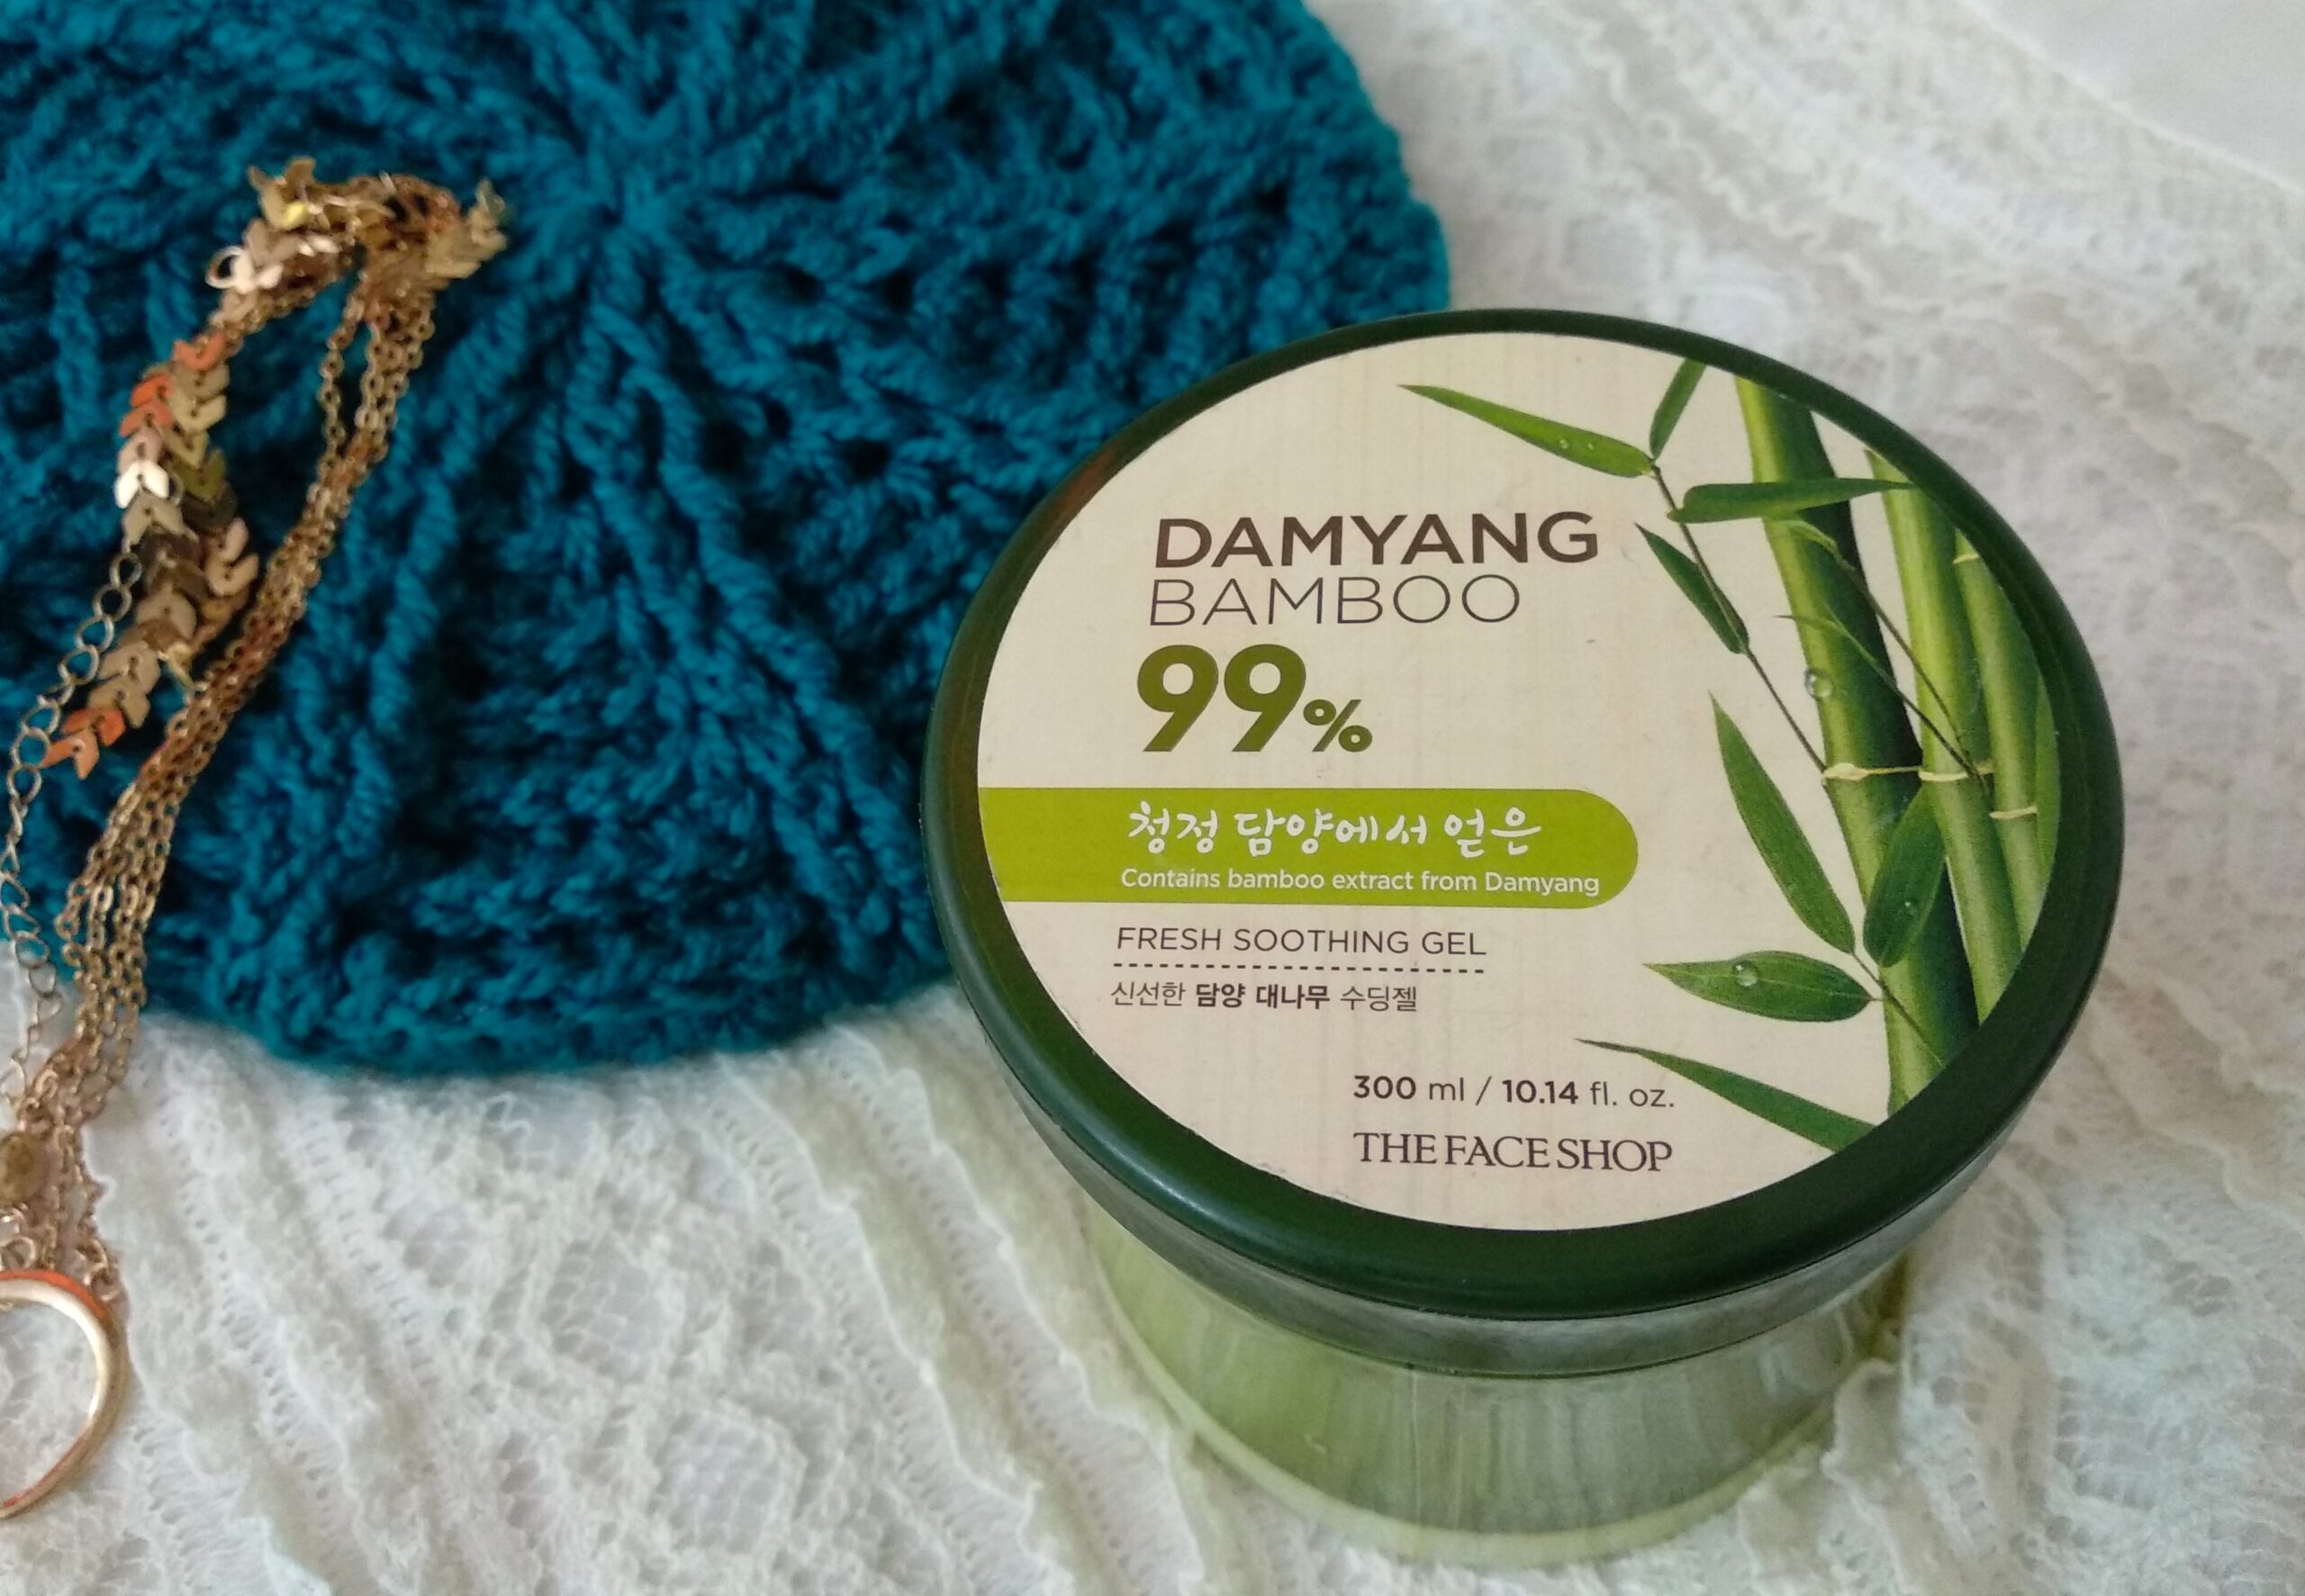 The face shop Damyang bamboo gel review